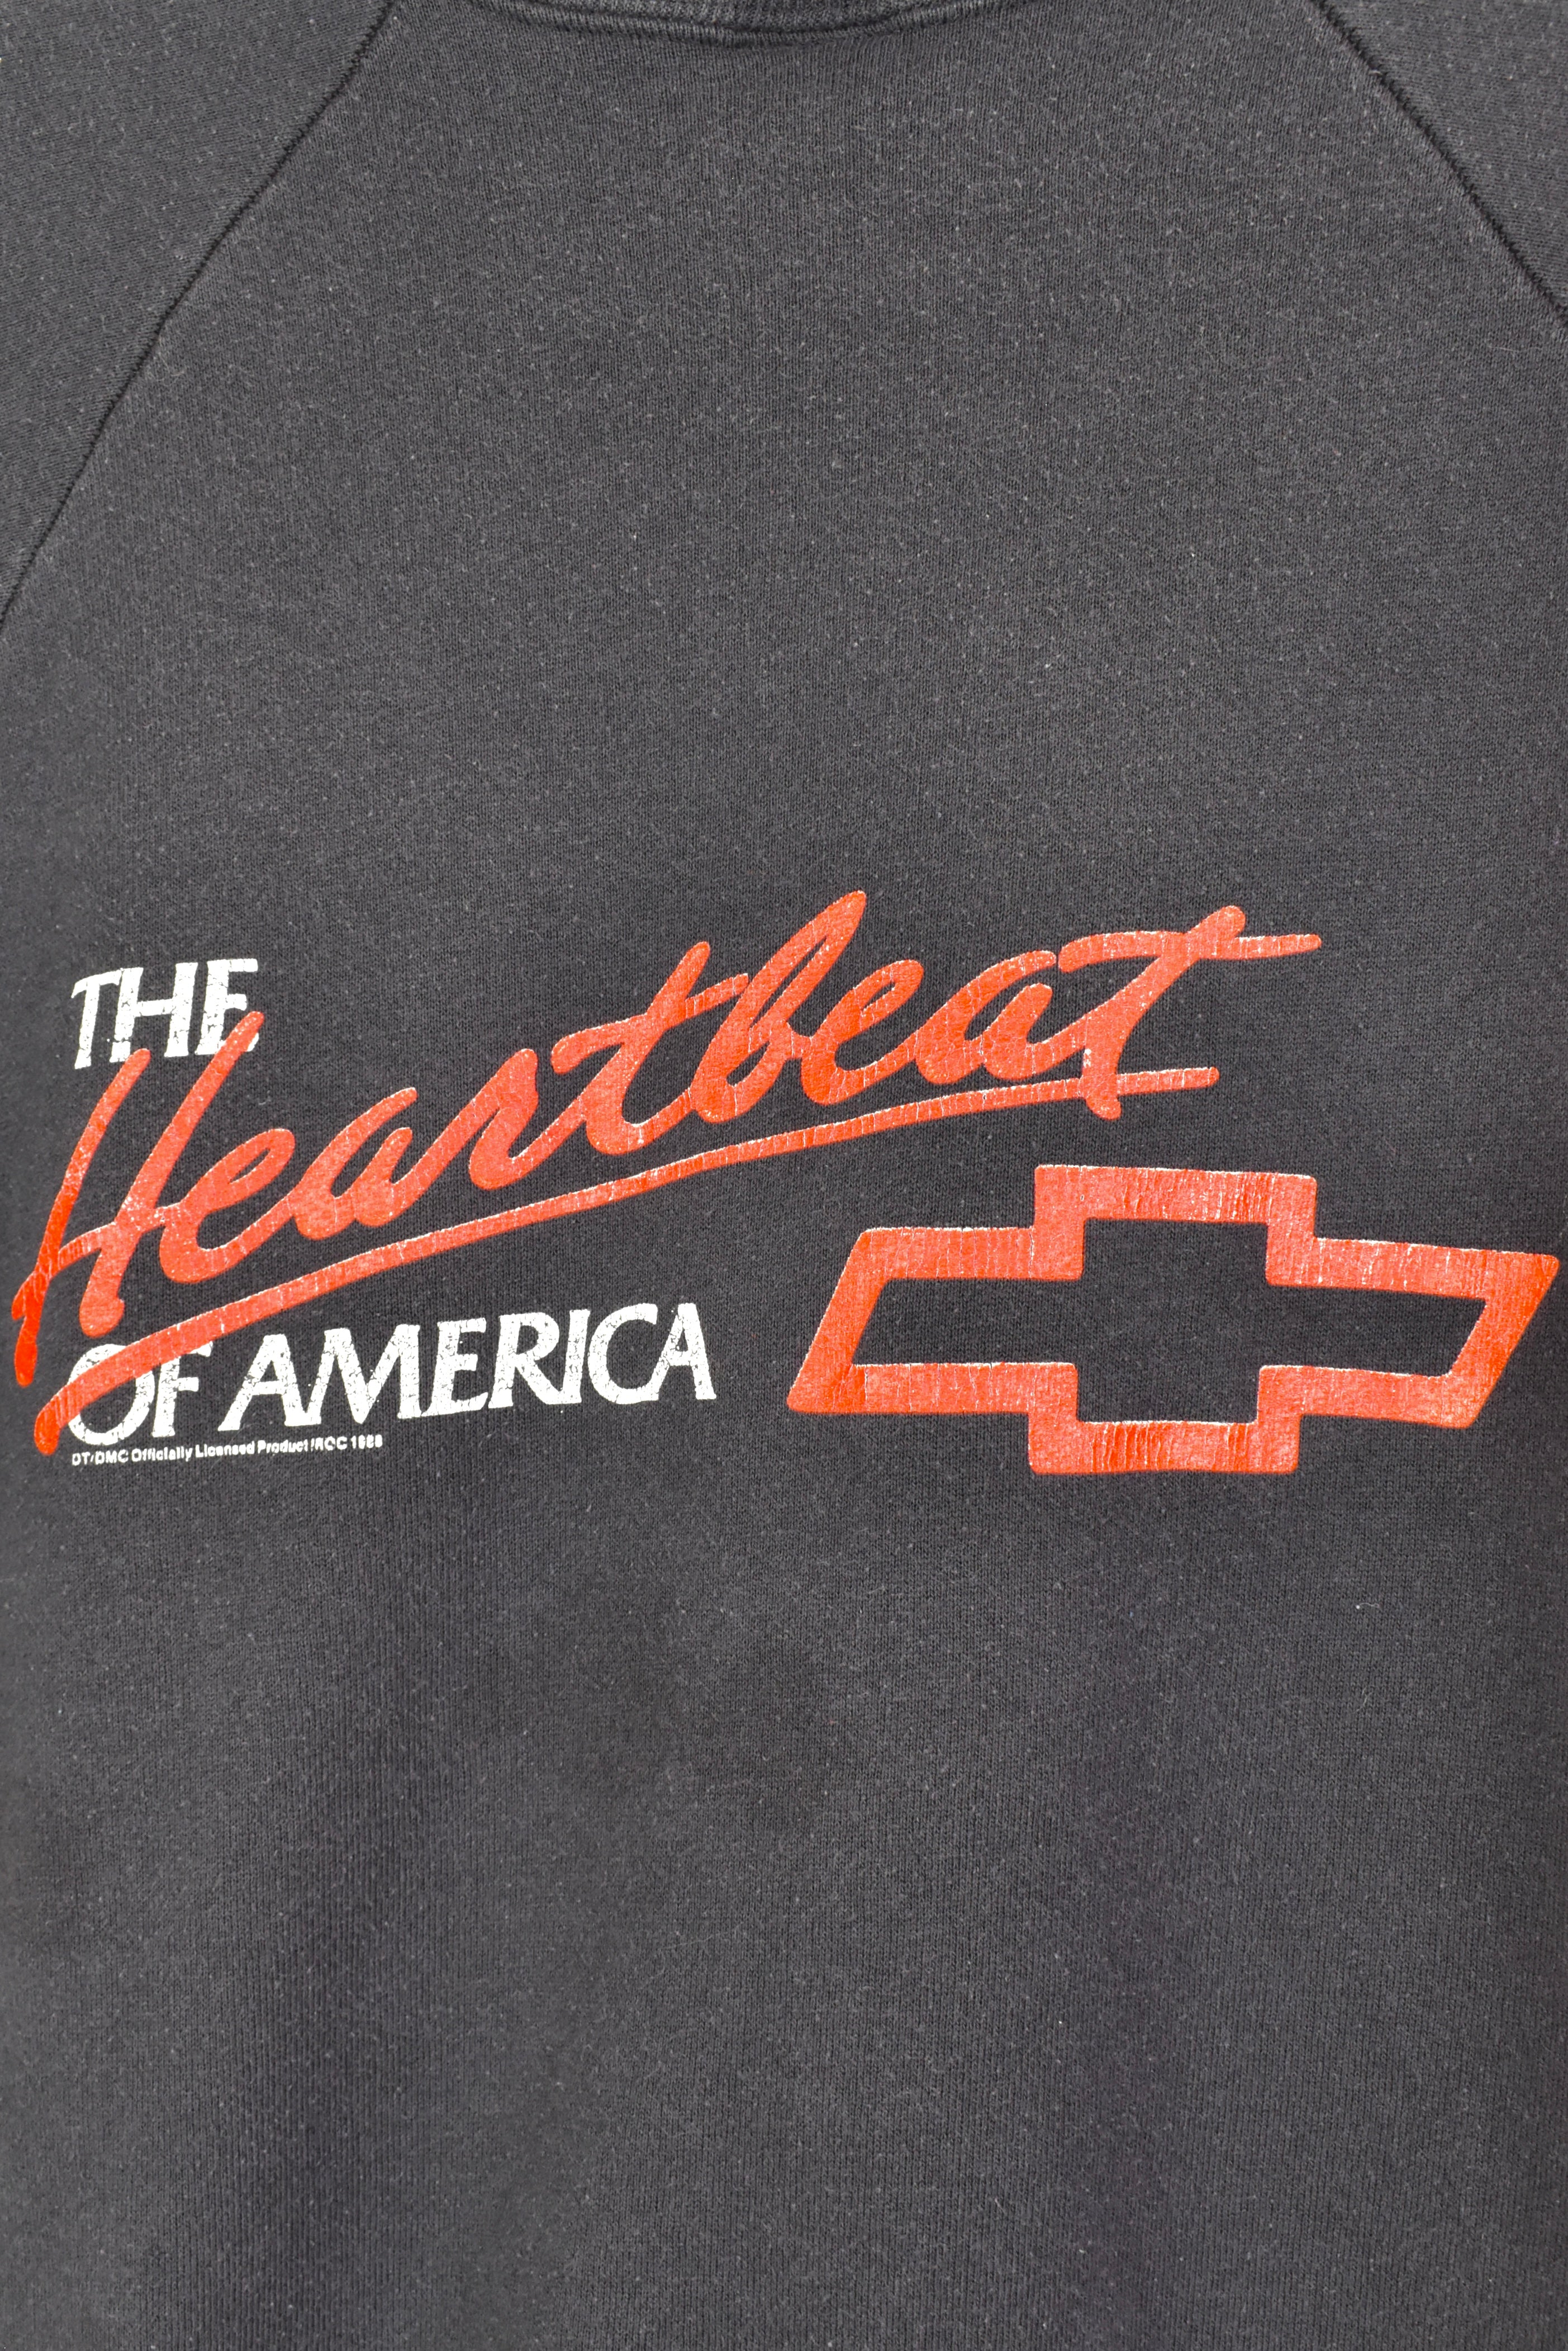 Vintage 1988 Chevrolet black sweatshirt | Medium NASCAR / RACING